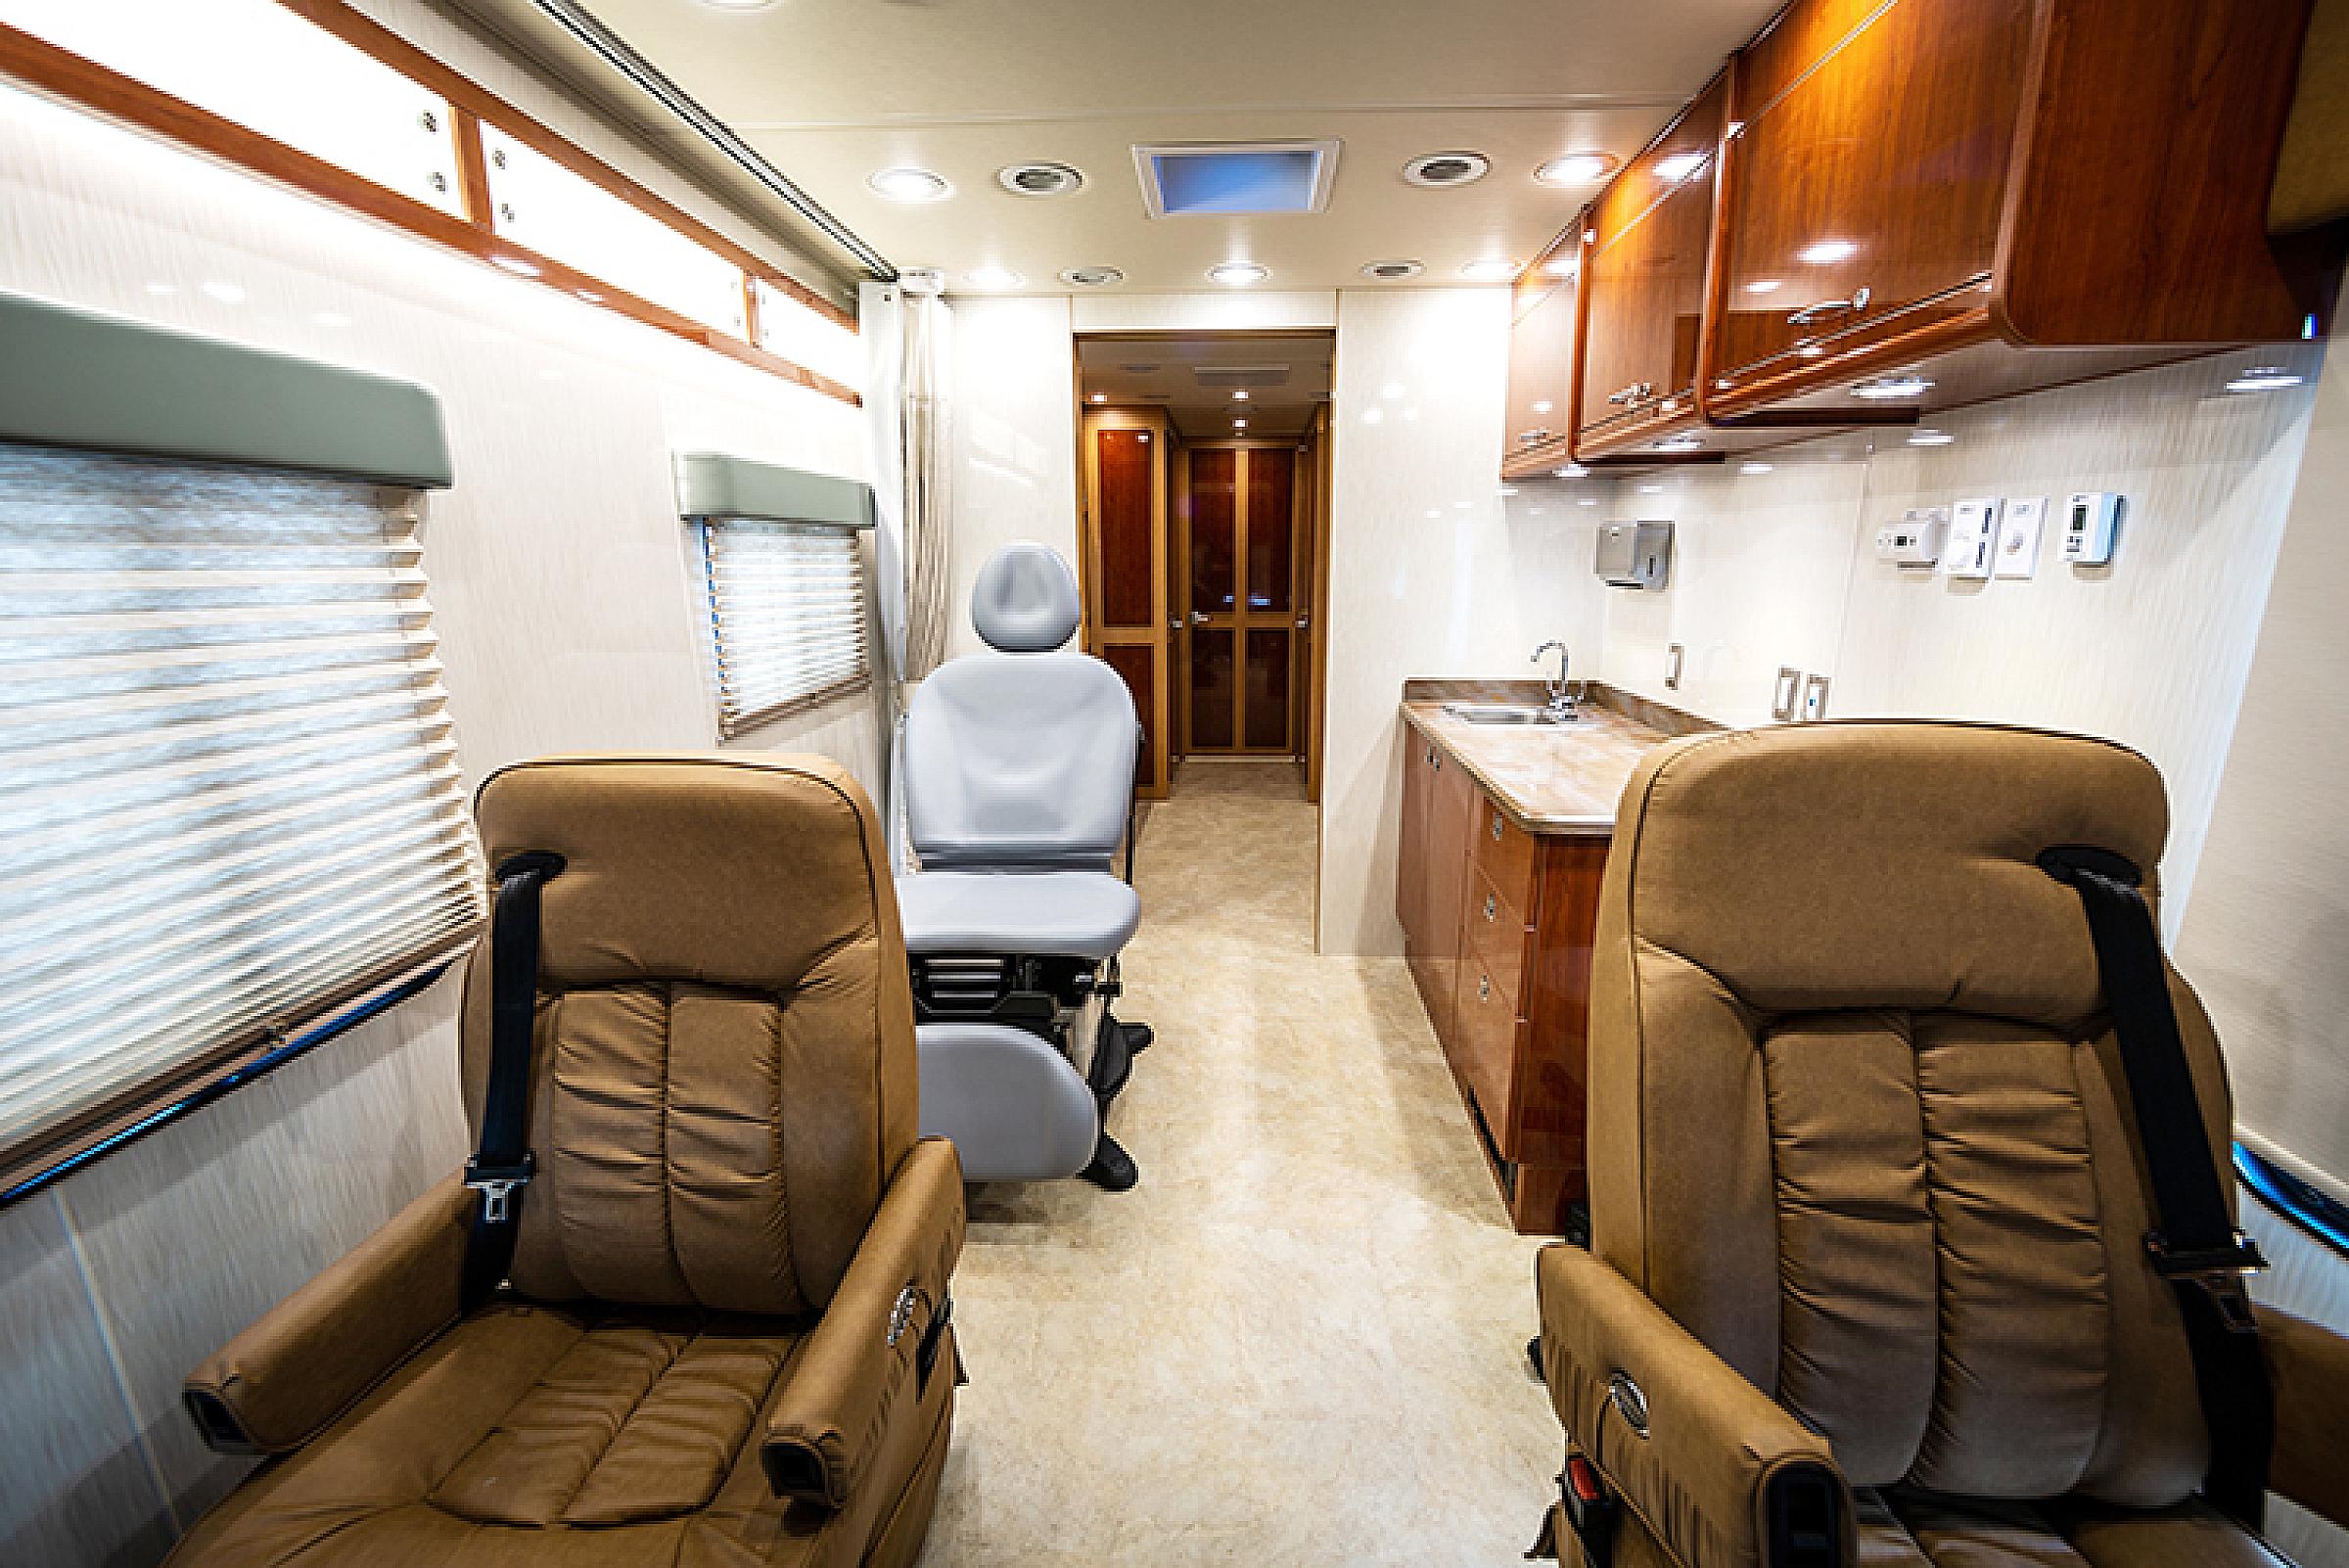 HCI bus interior seats and countertop